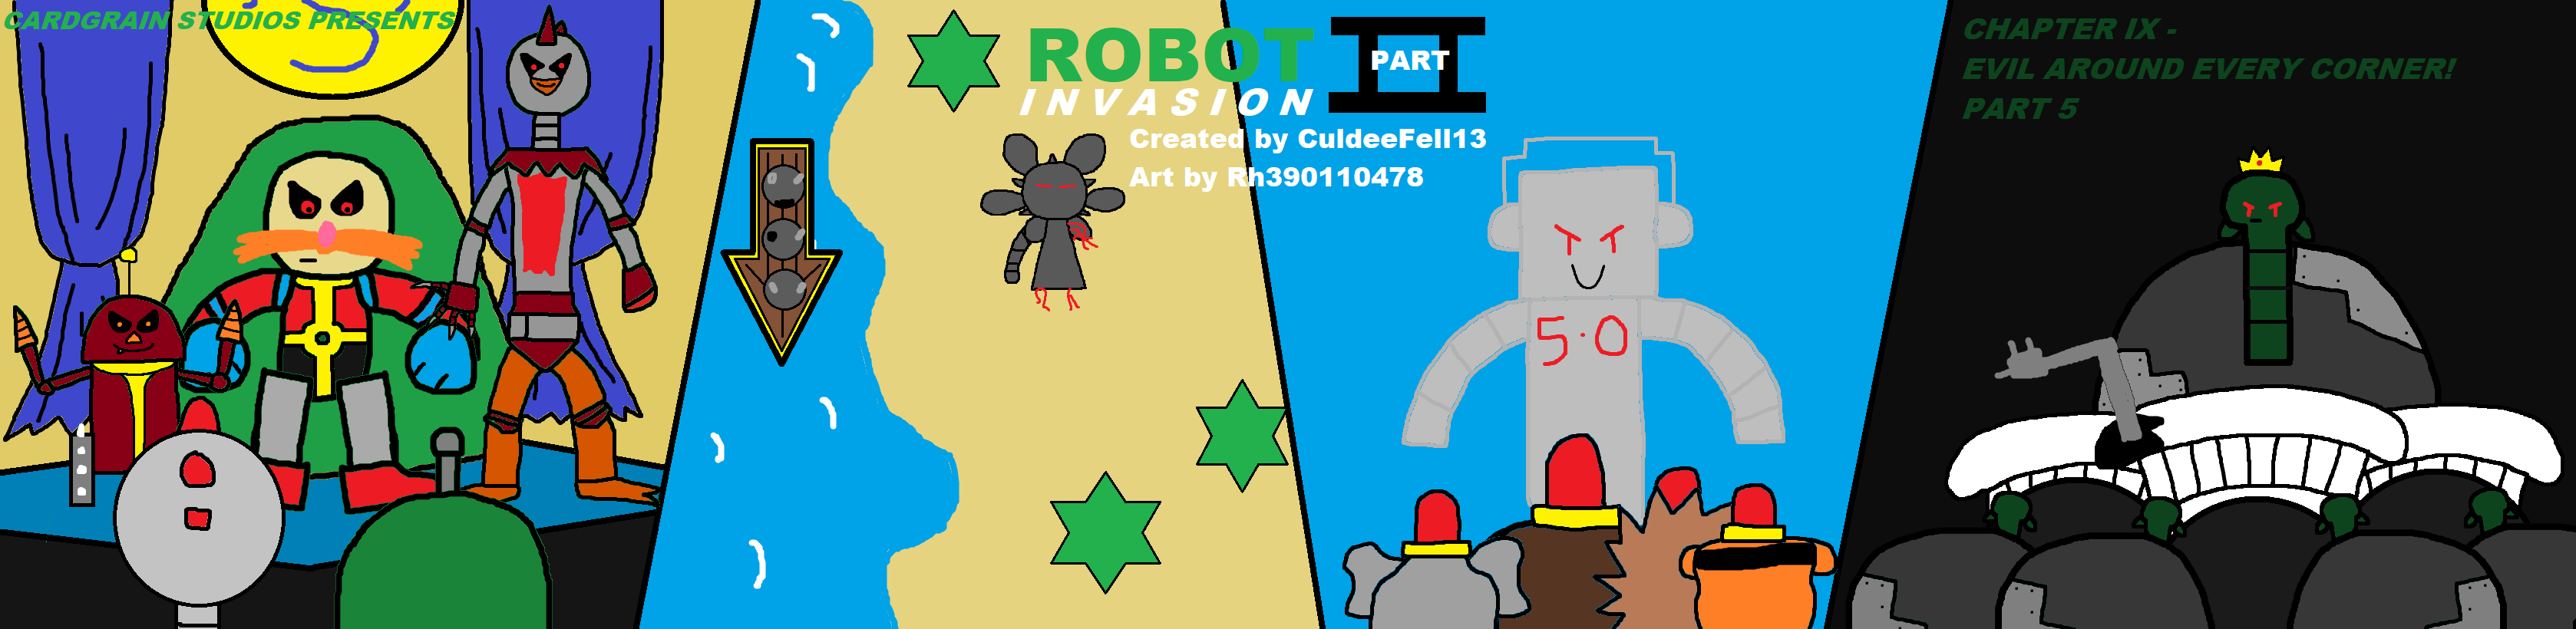 Robot Invasion Part Ii Sml Fanon Wiki Fandom - roblox deserted secret ending youtube